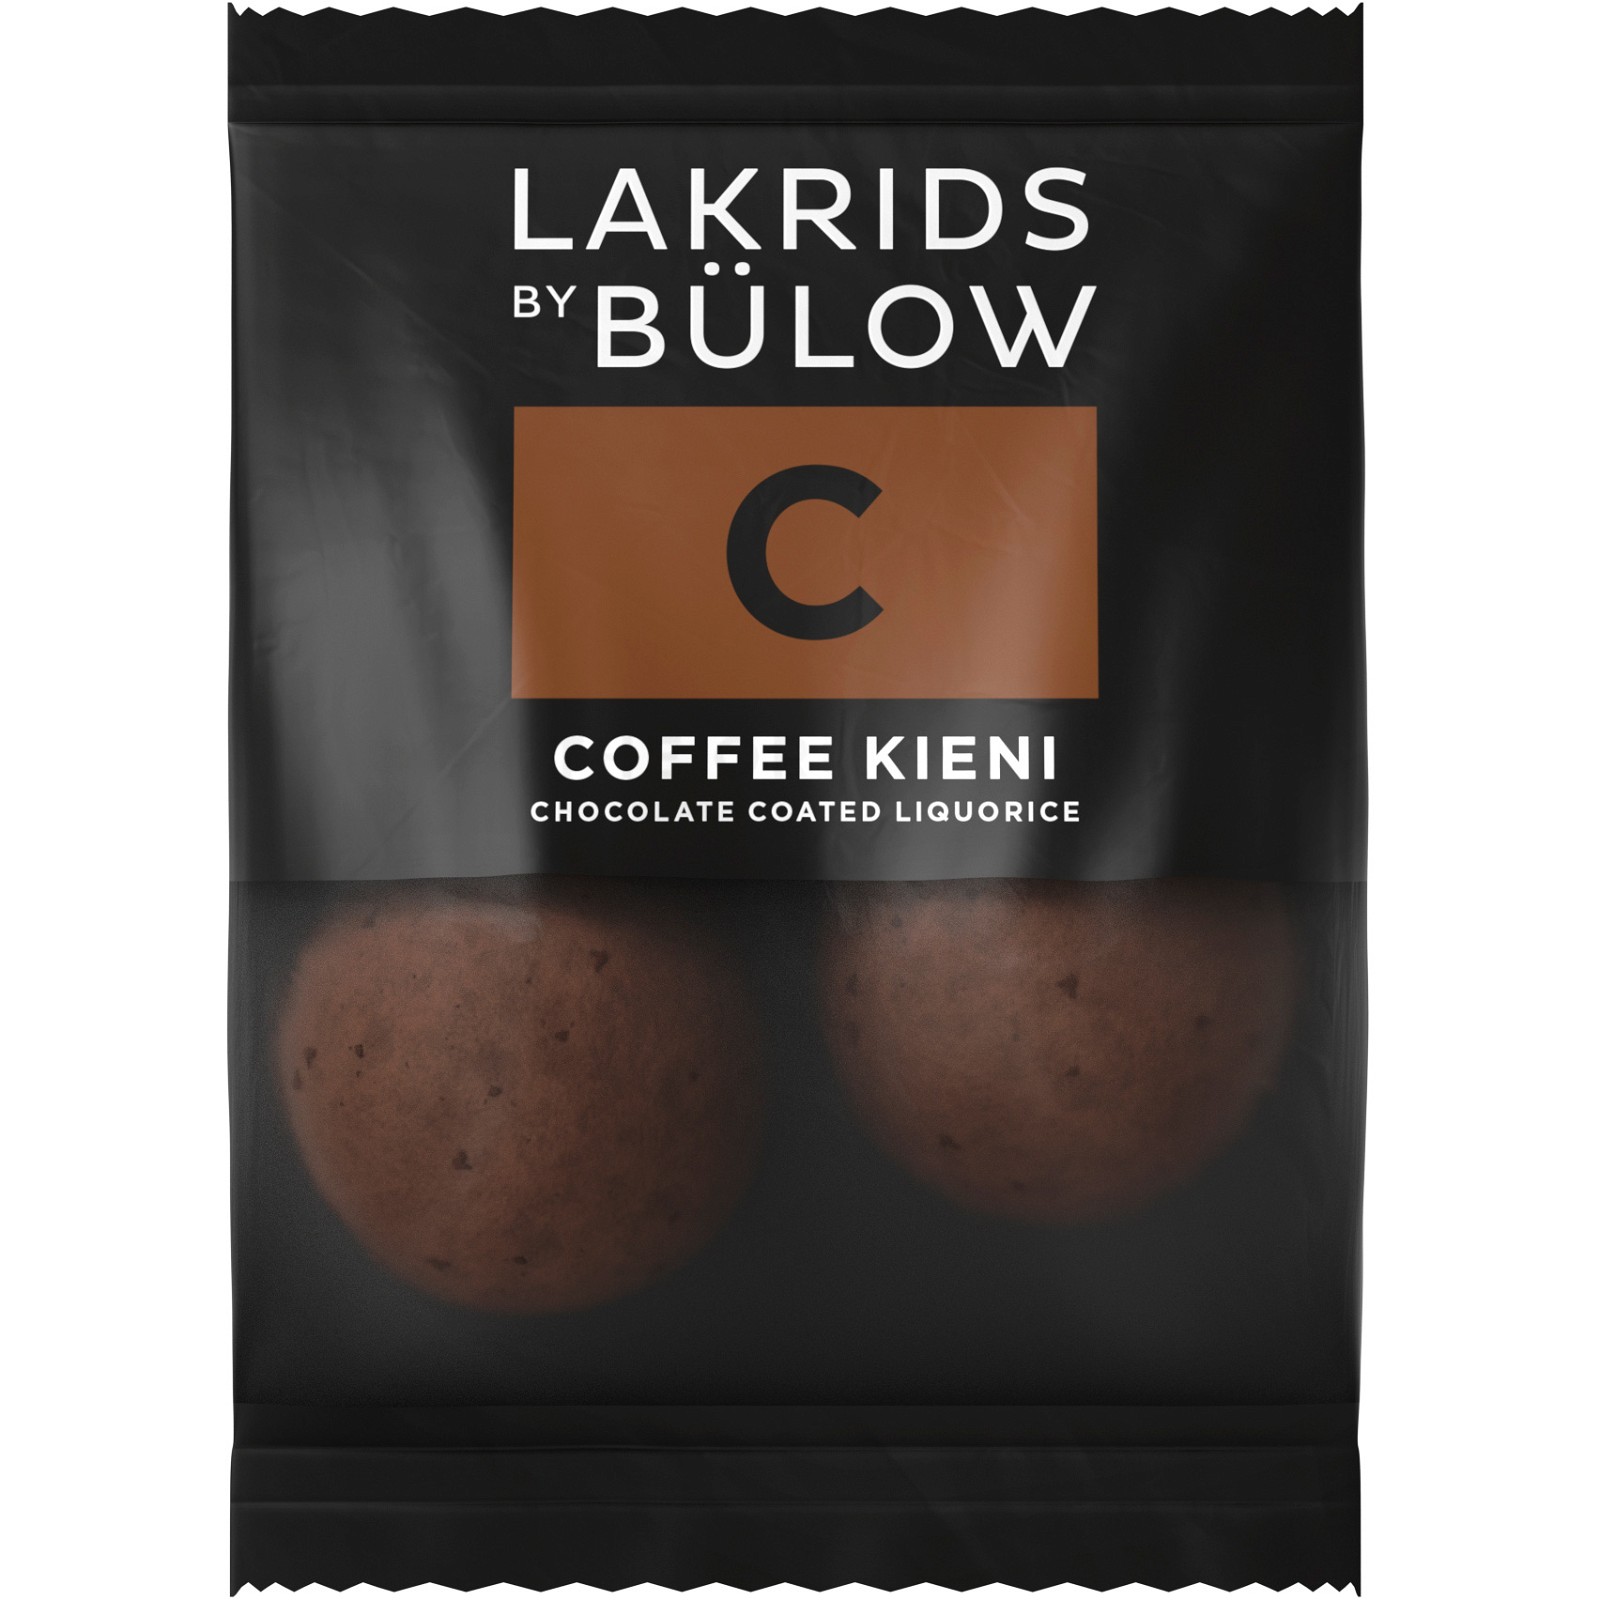 Lakrids by Bülow C Coffee Kieni lakridskugler 2-stks/250 pk